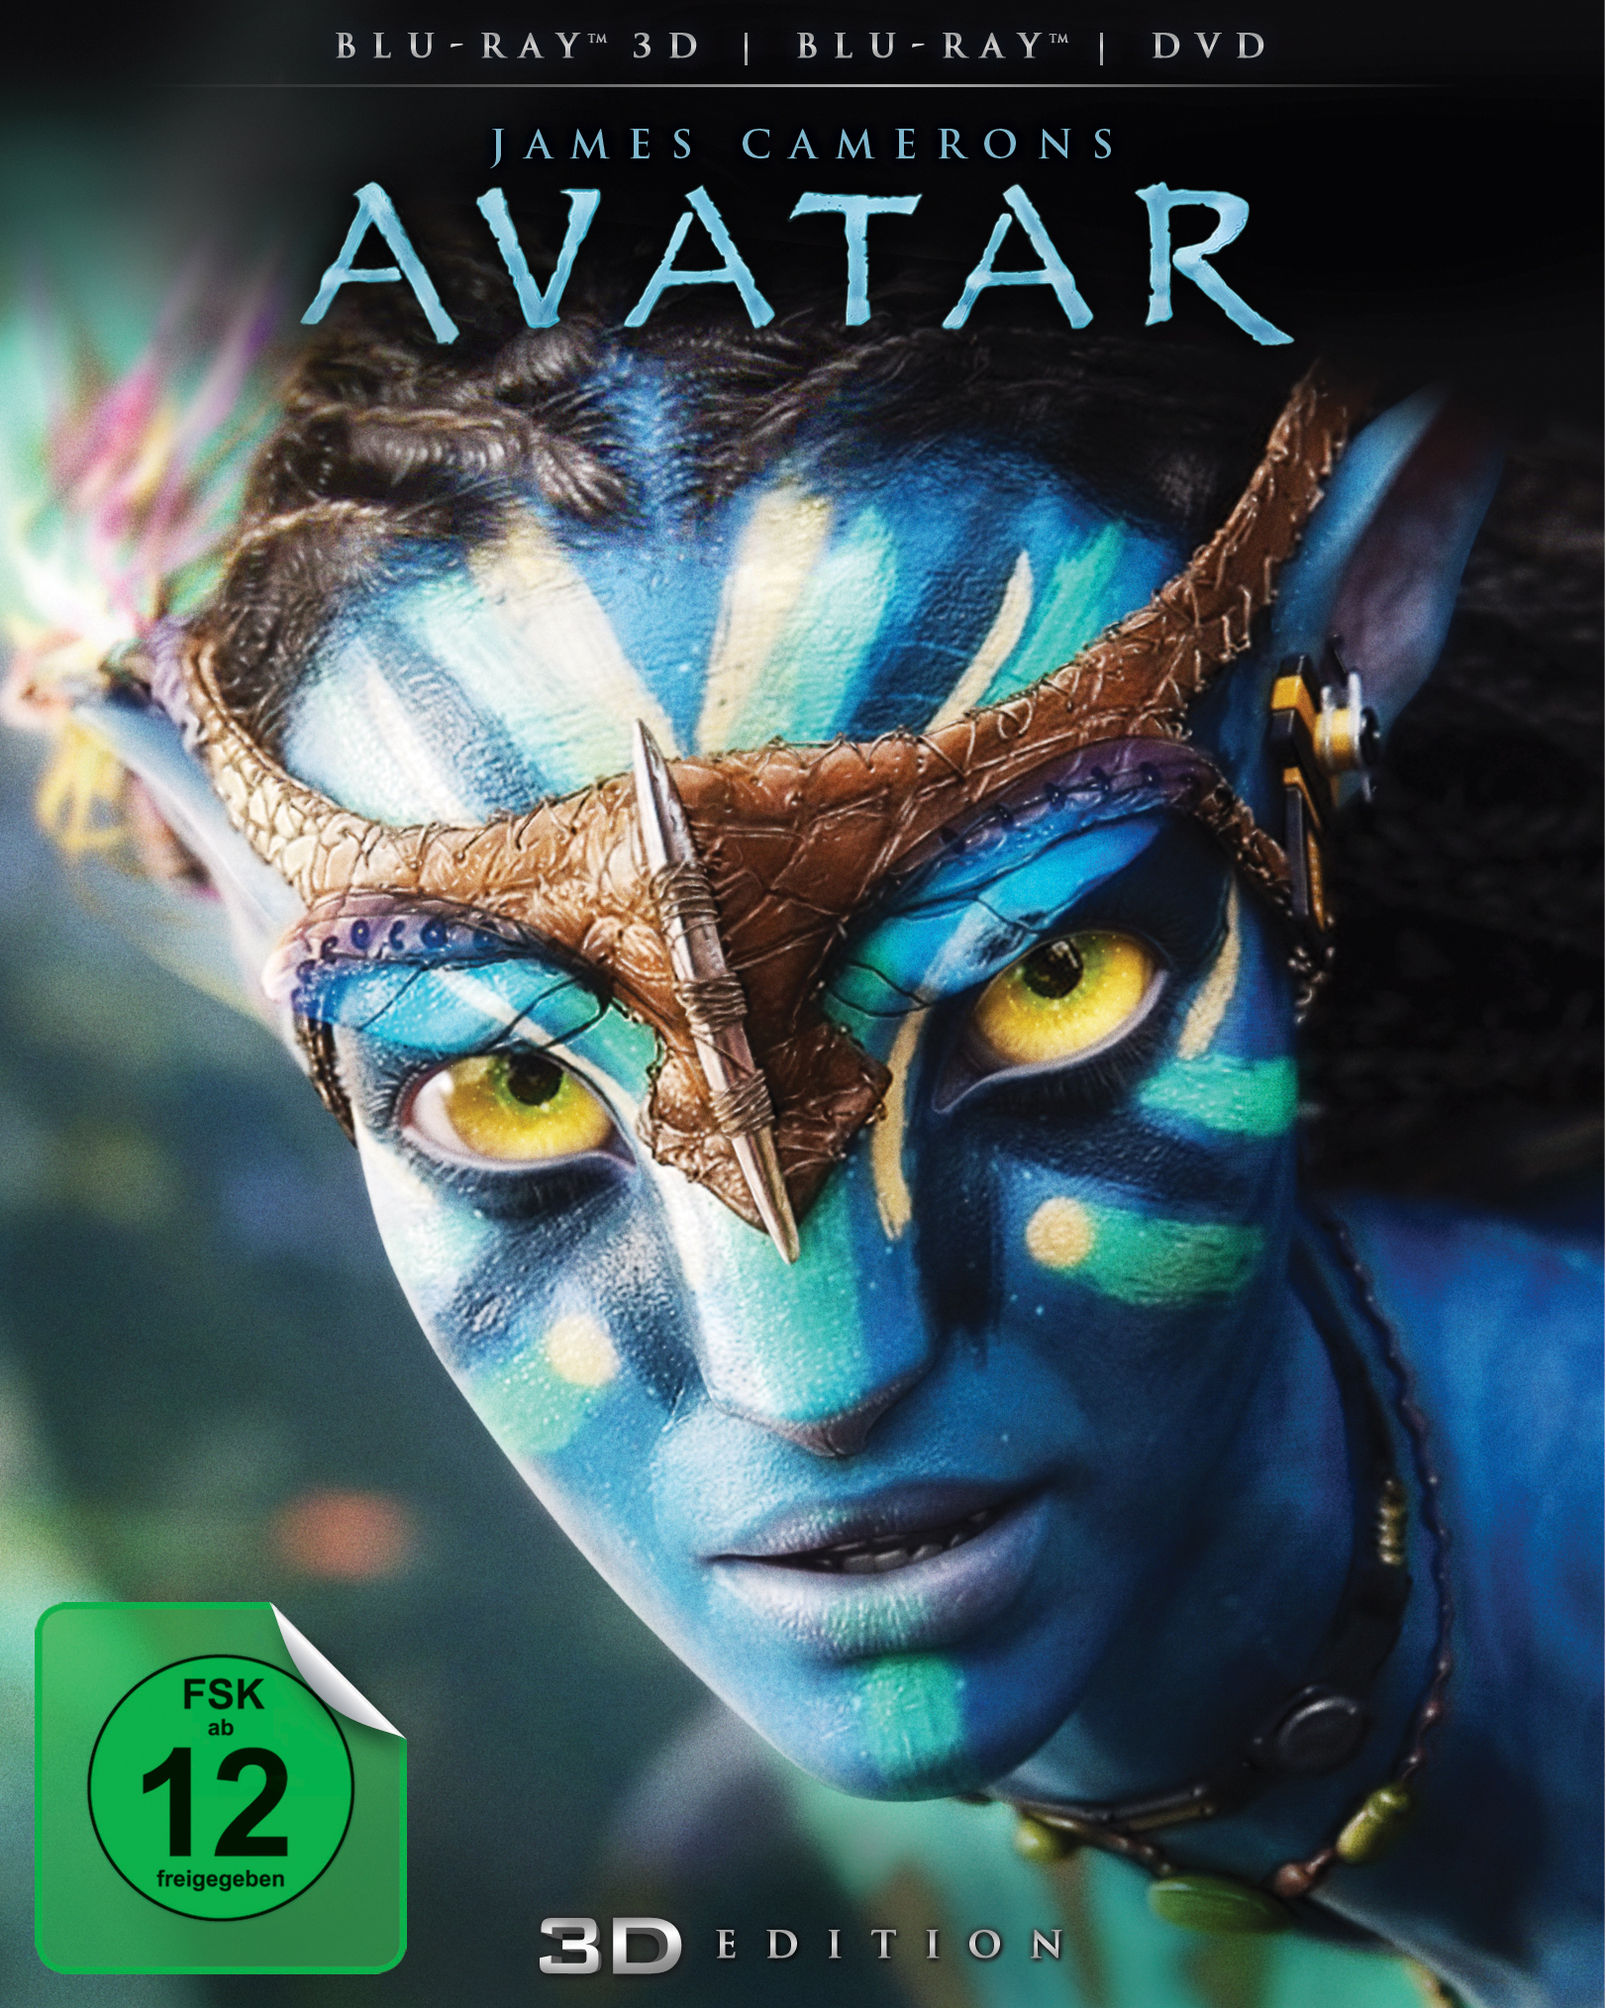 Avatar - 3D-Version Blu-ray jetzt im Weltbild.de Shop bestellen